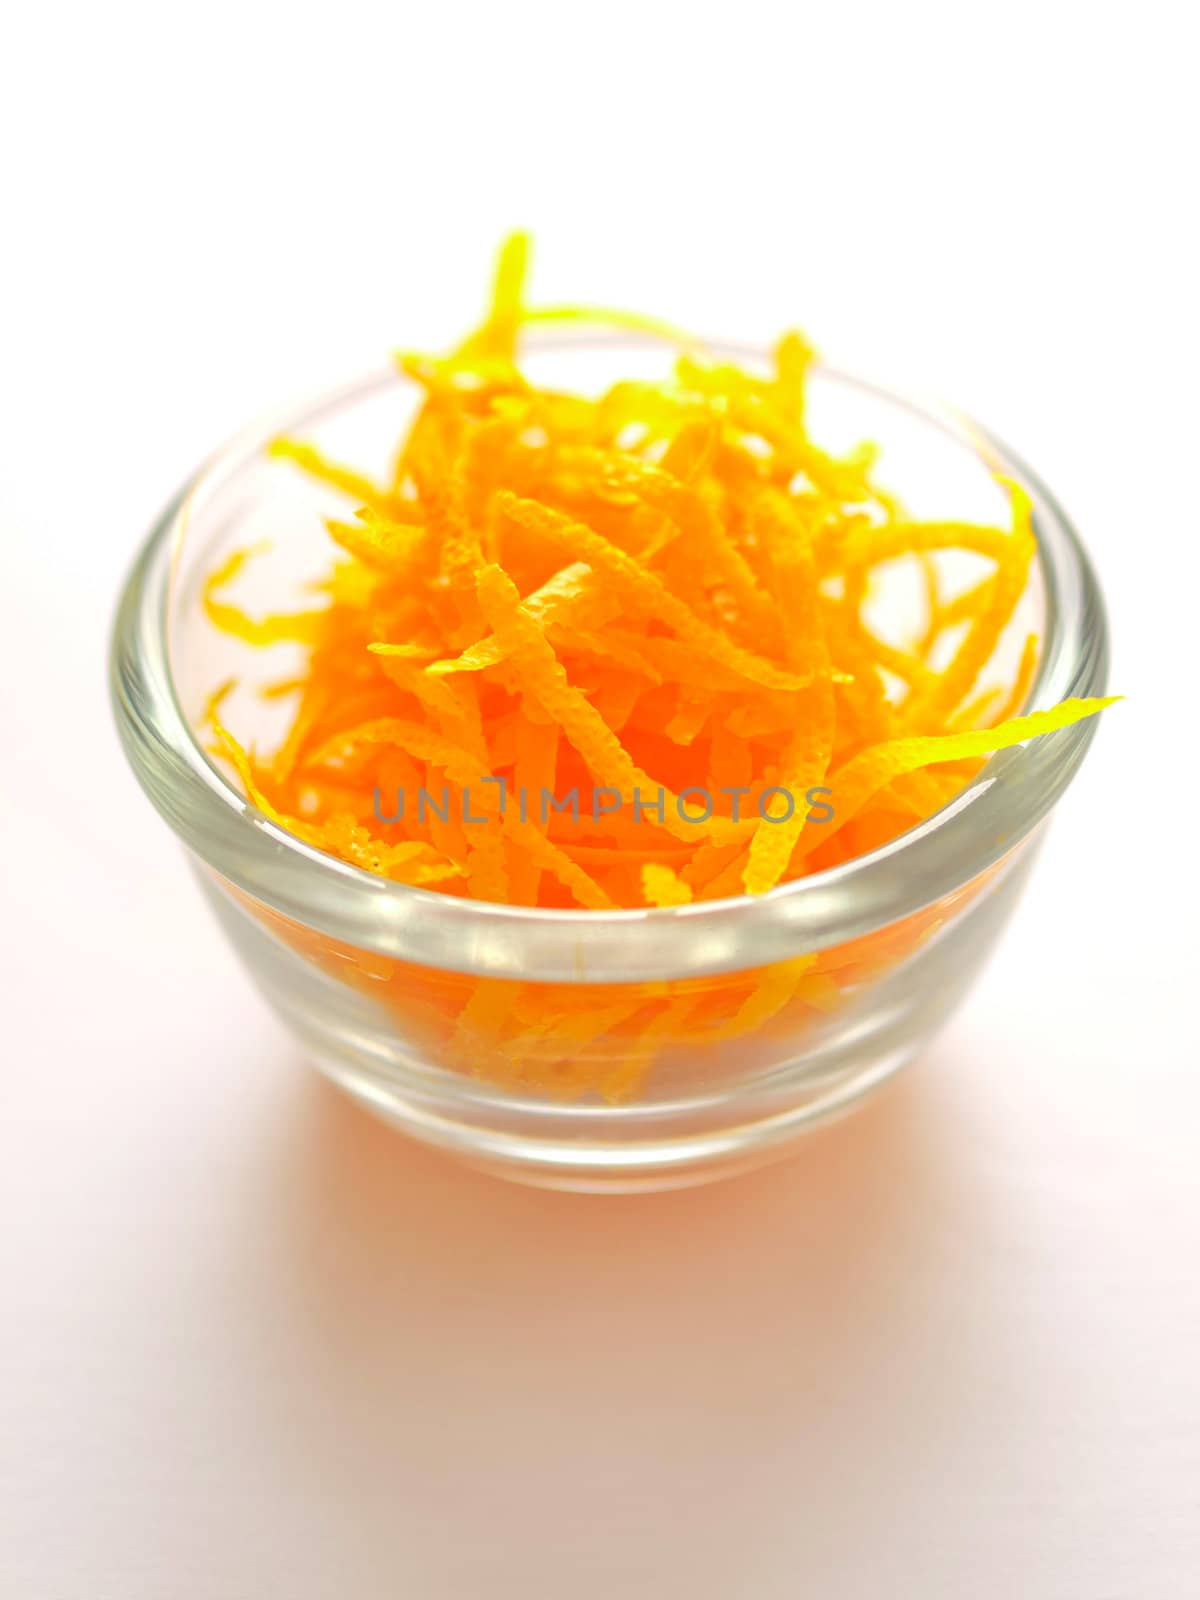 close up of a bowl of orange zest